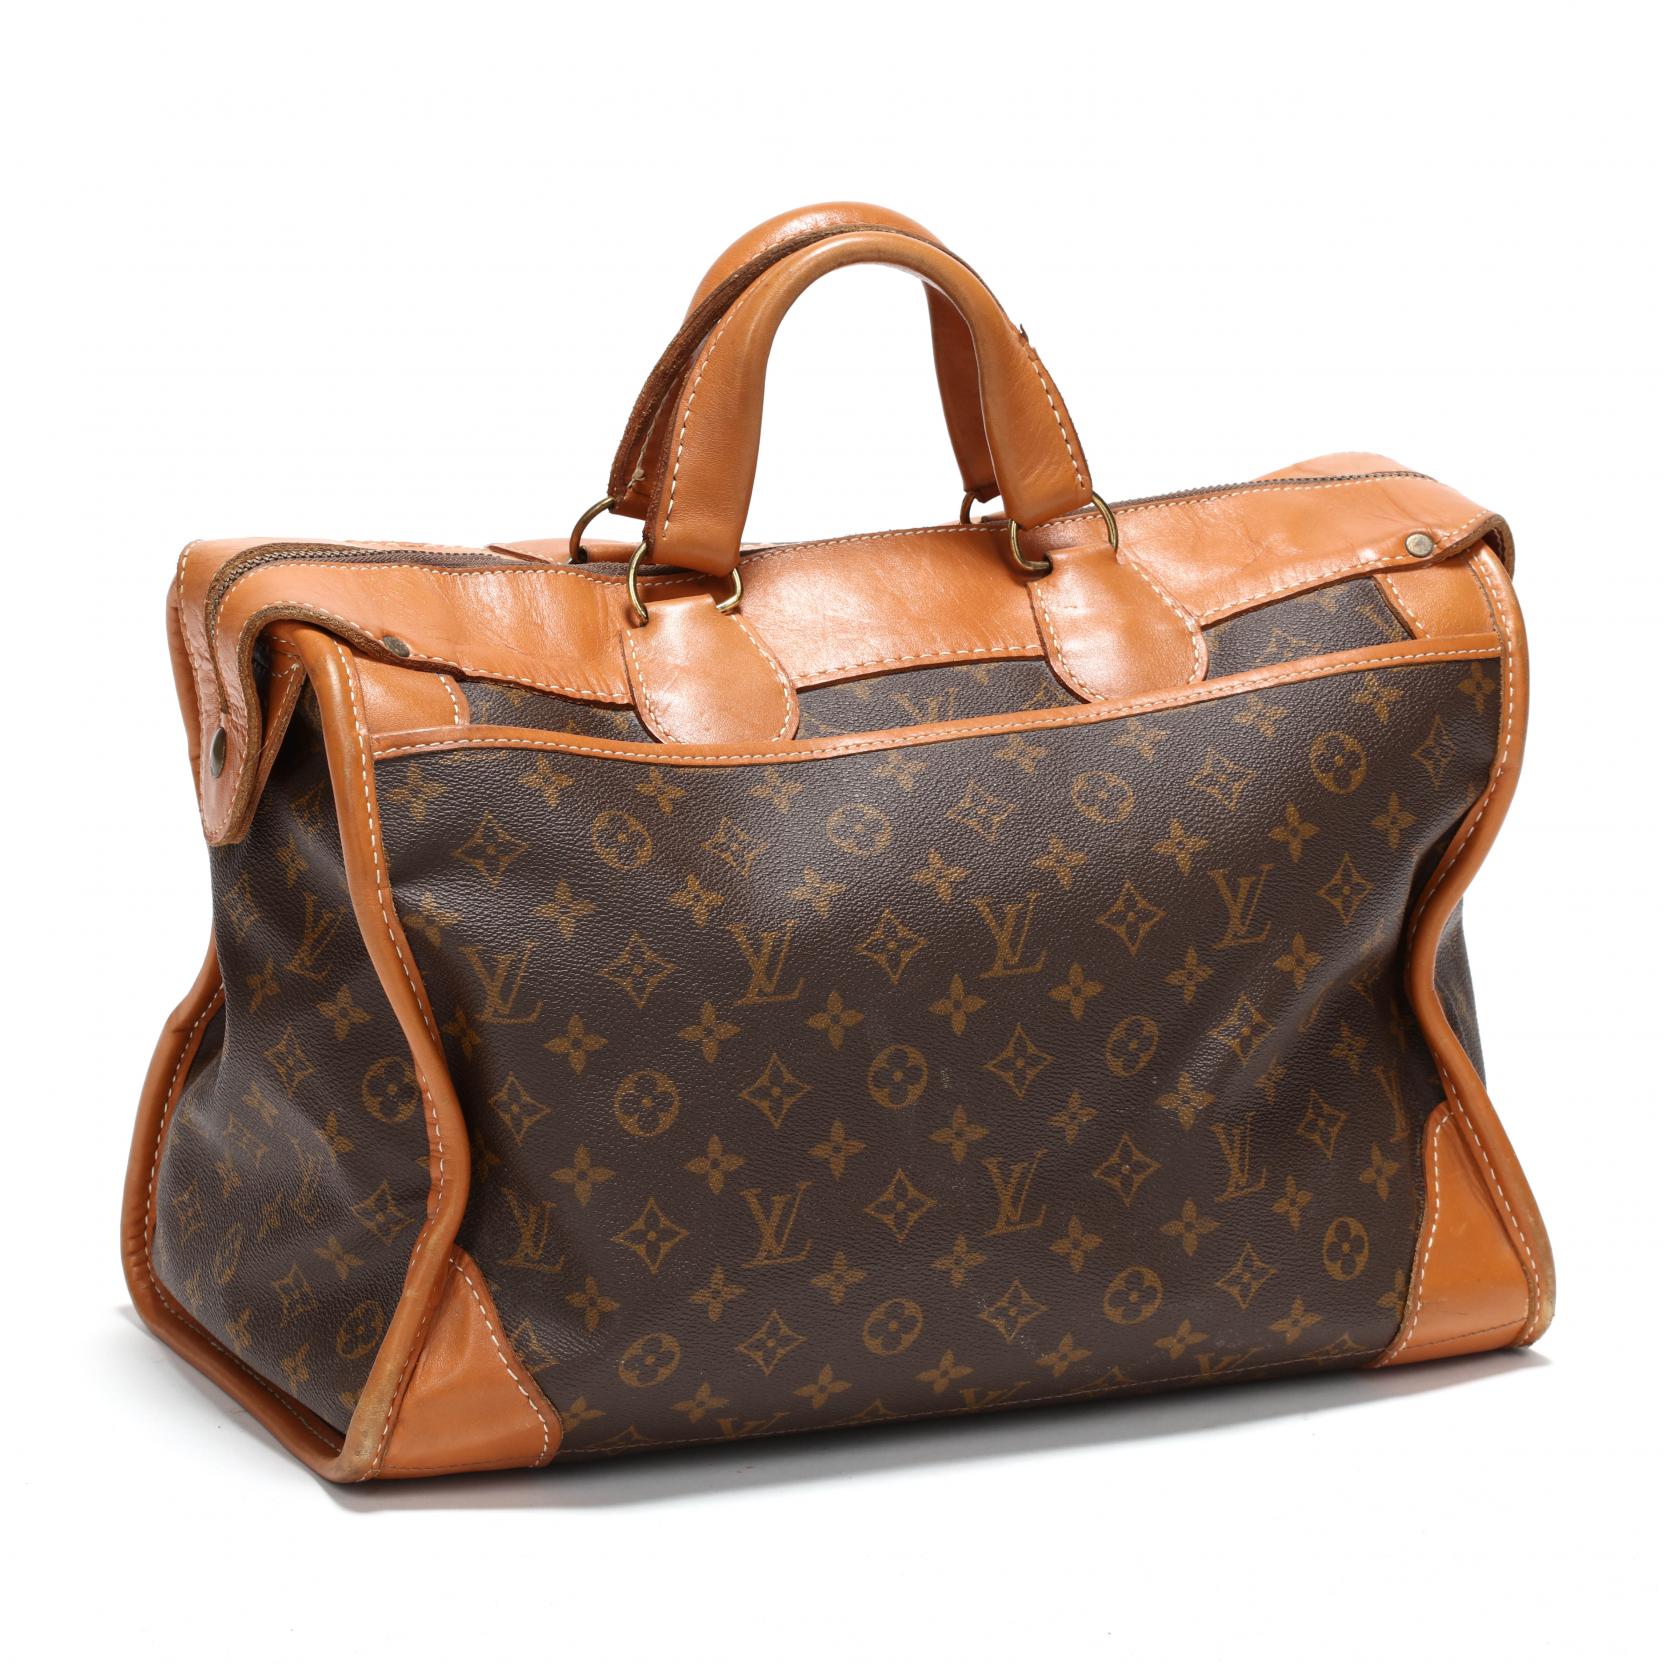 Sold at Auction: Vintage Louis Vuitton Soft Case Overnight Bag